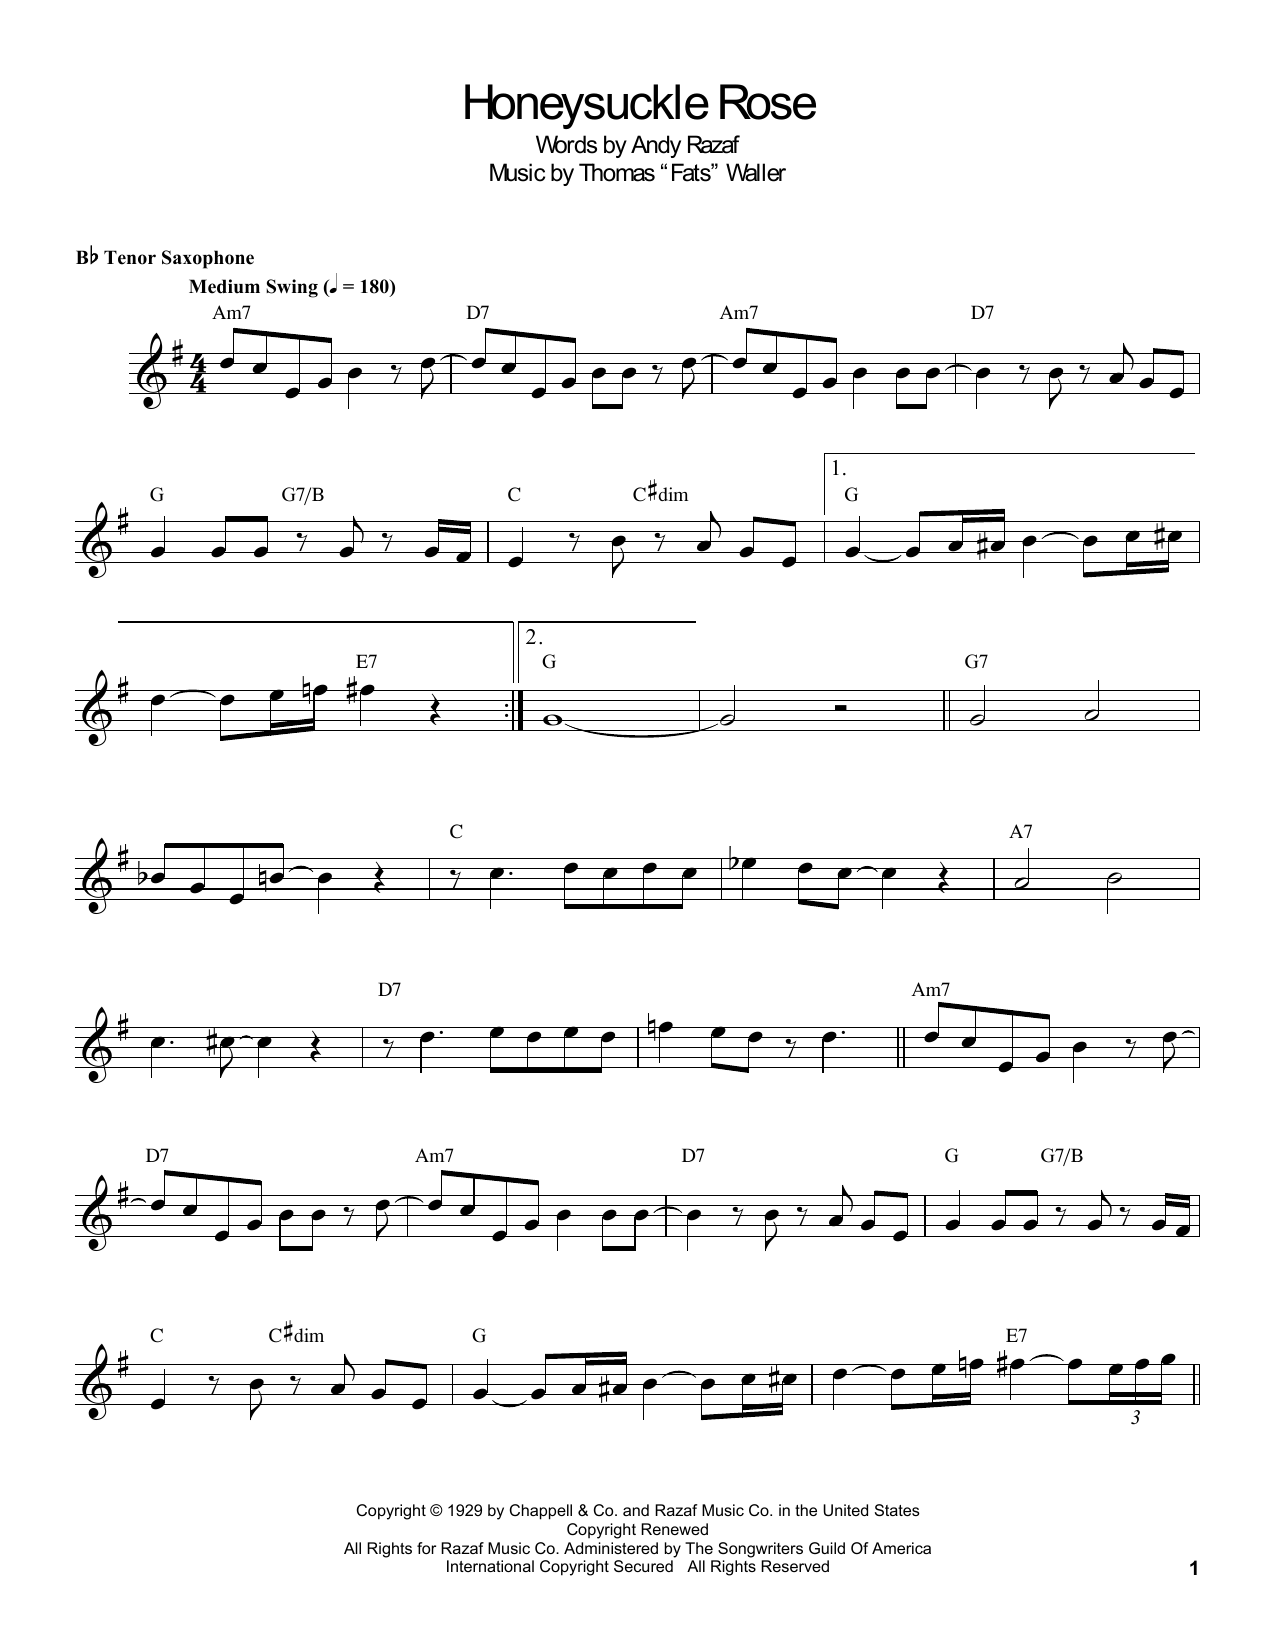 Coleman Hawkins Honeysuckle Rose sheet music notes and chords. Download Printable PDF.